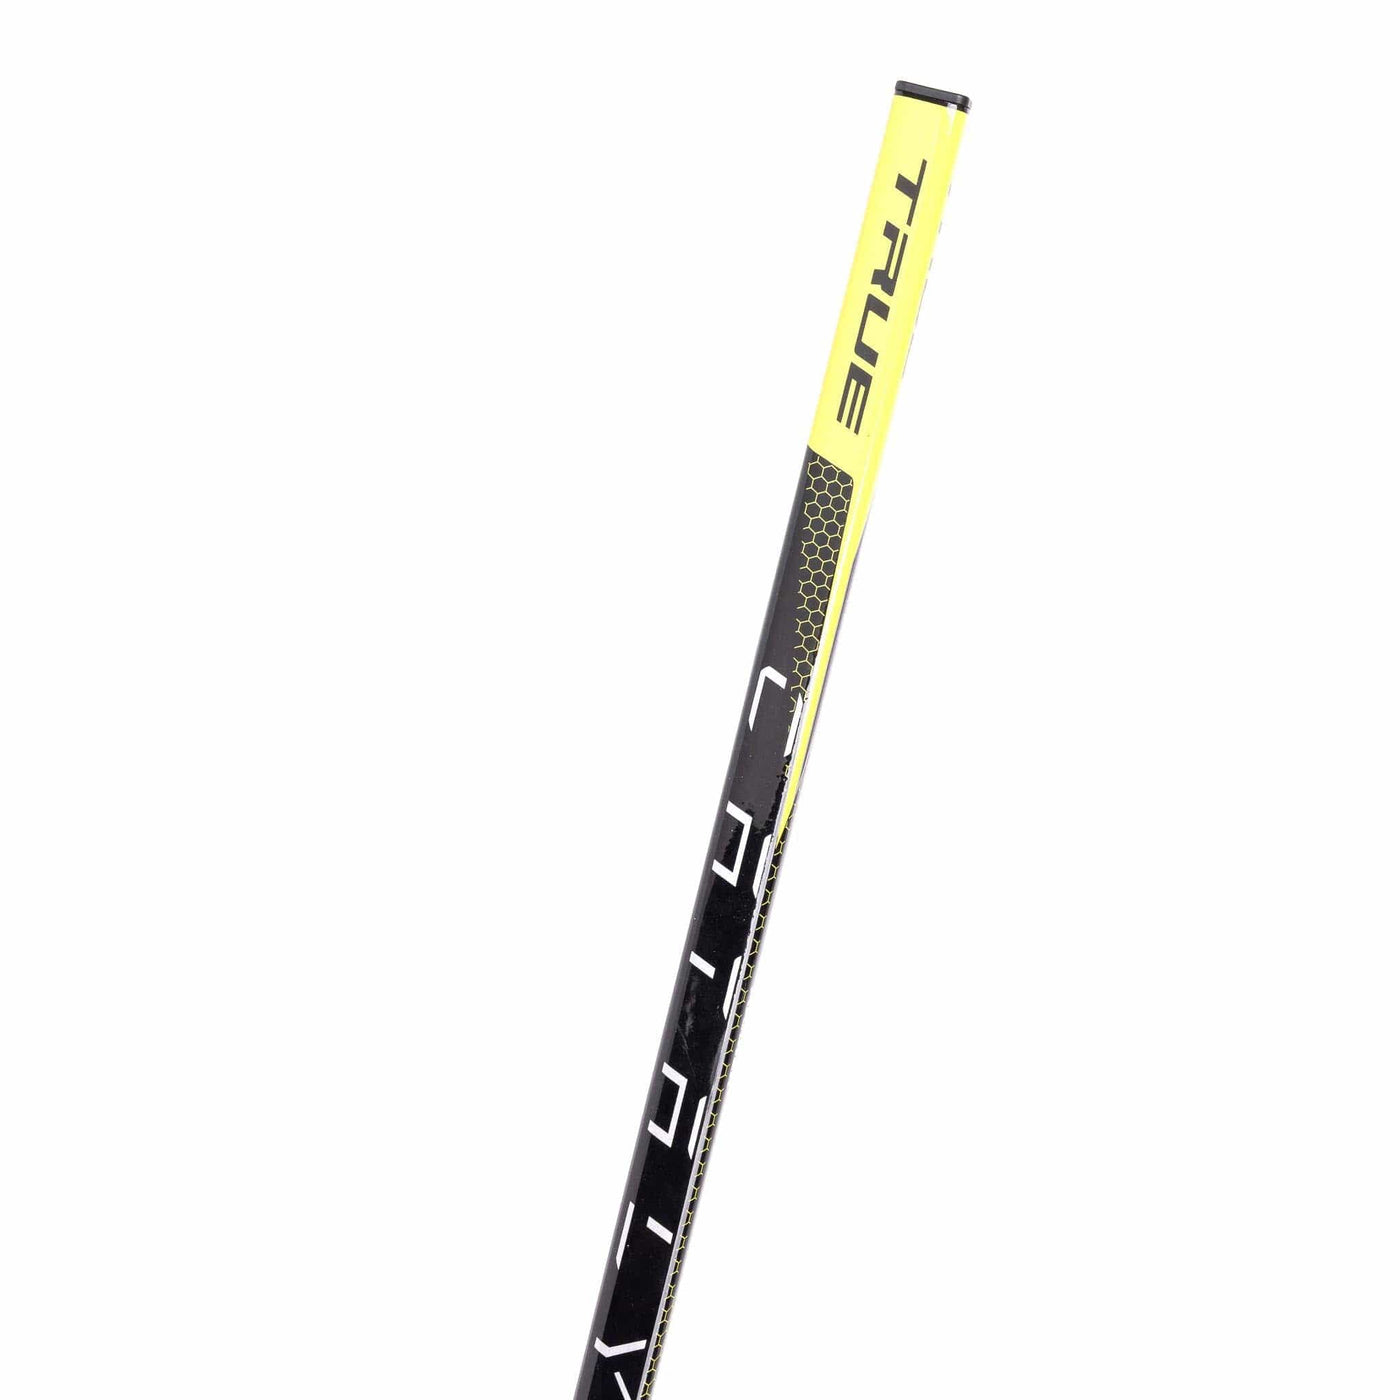 TRUE Catalyst 3X Junior Hockey Stick - 30 Flex